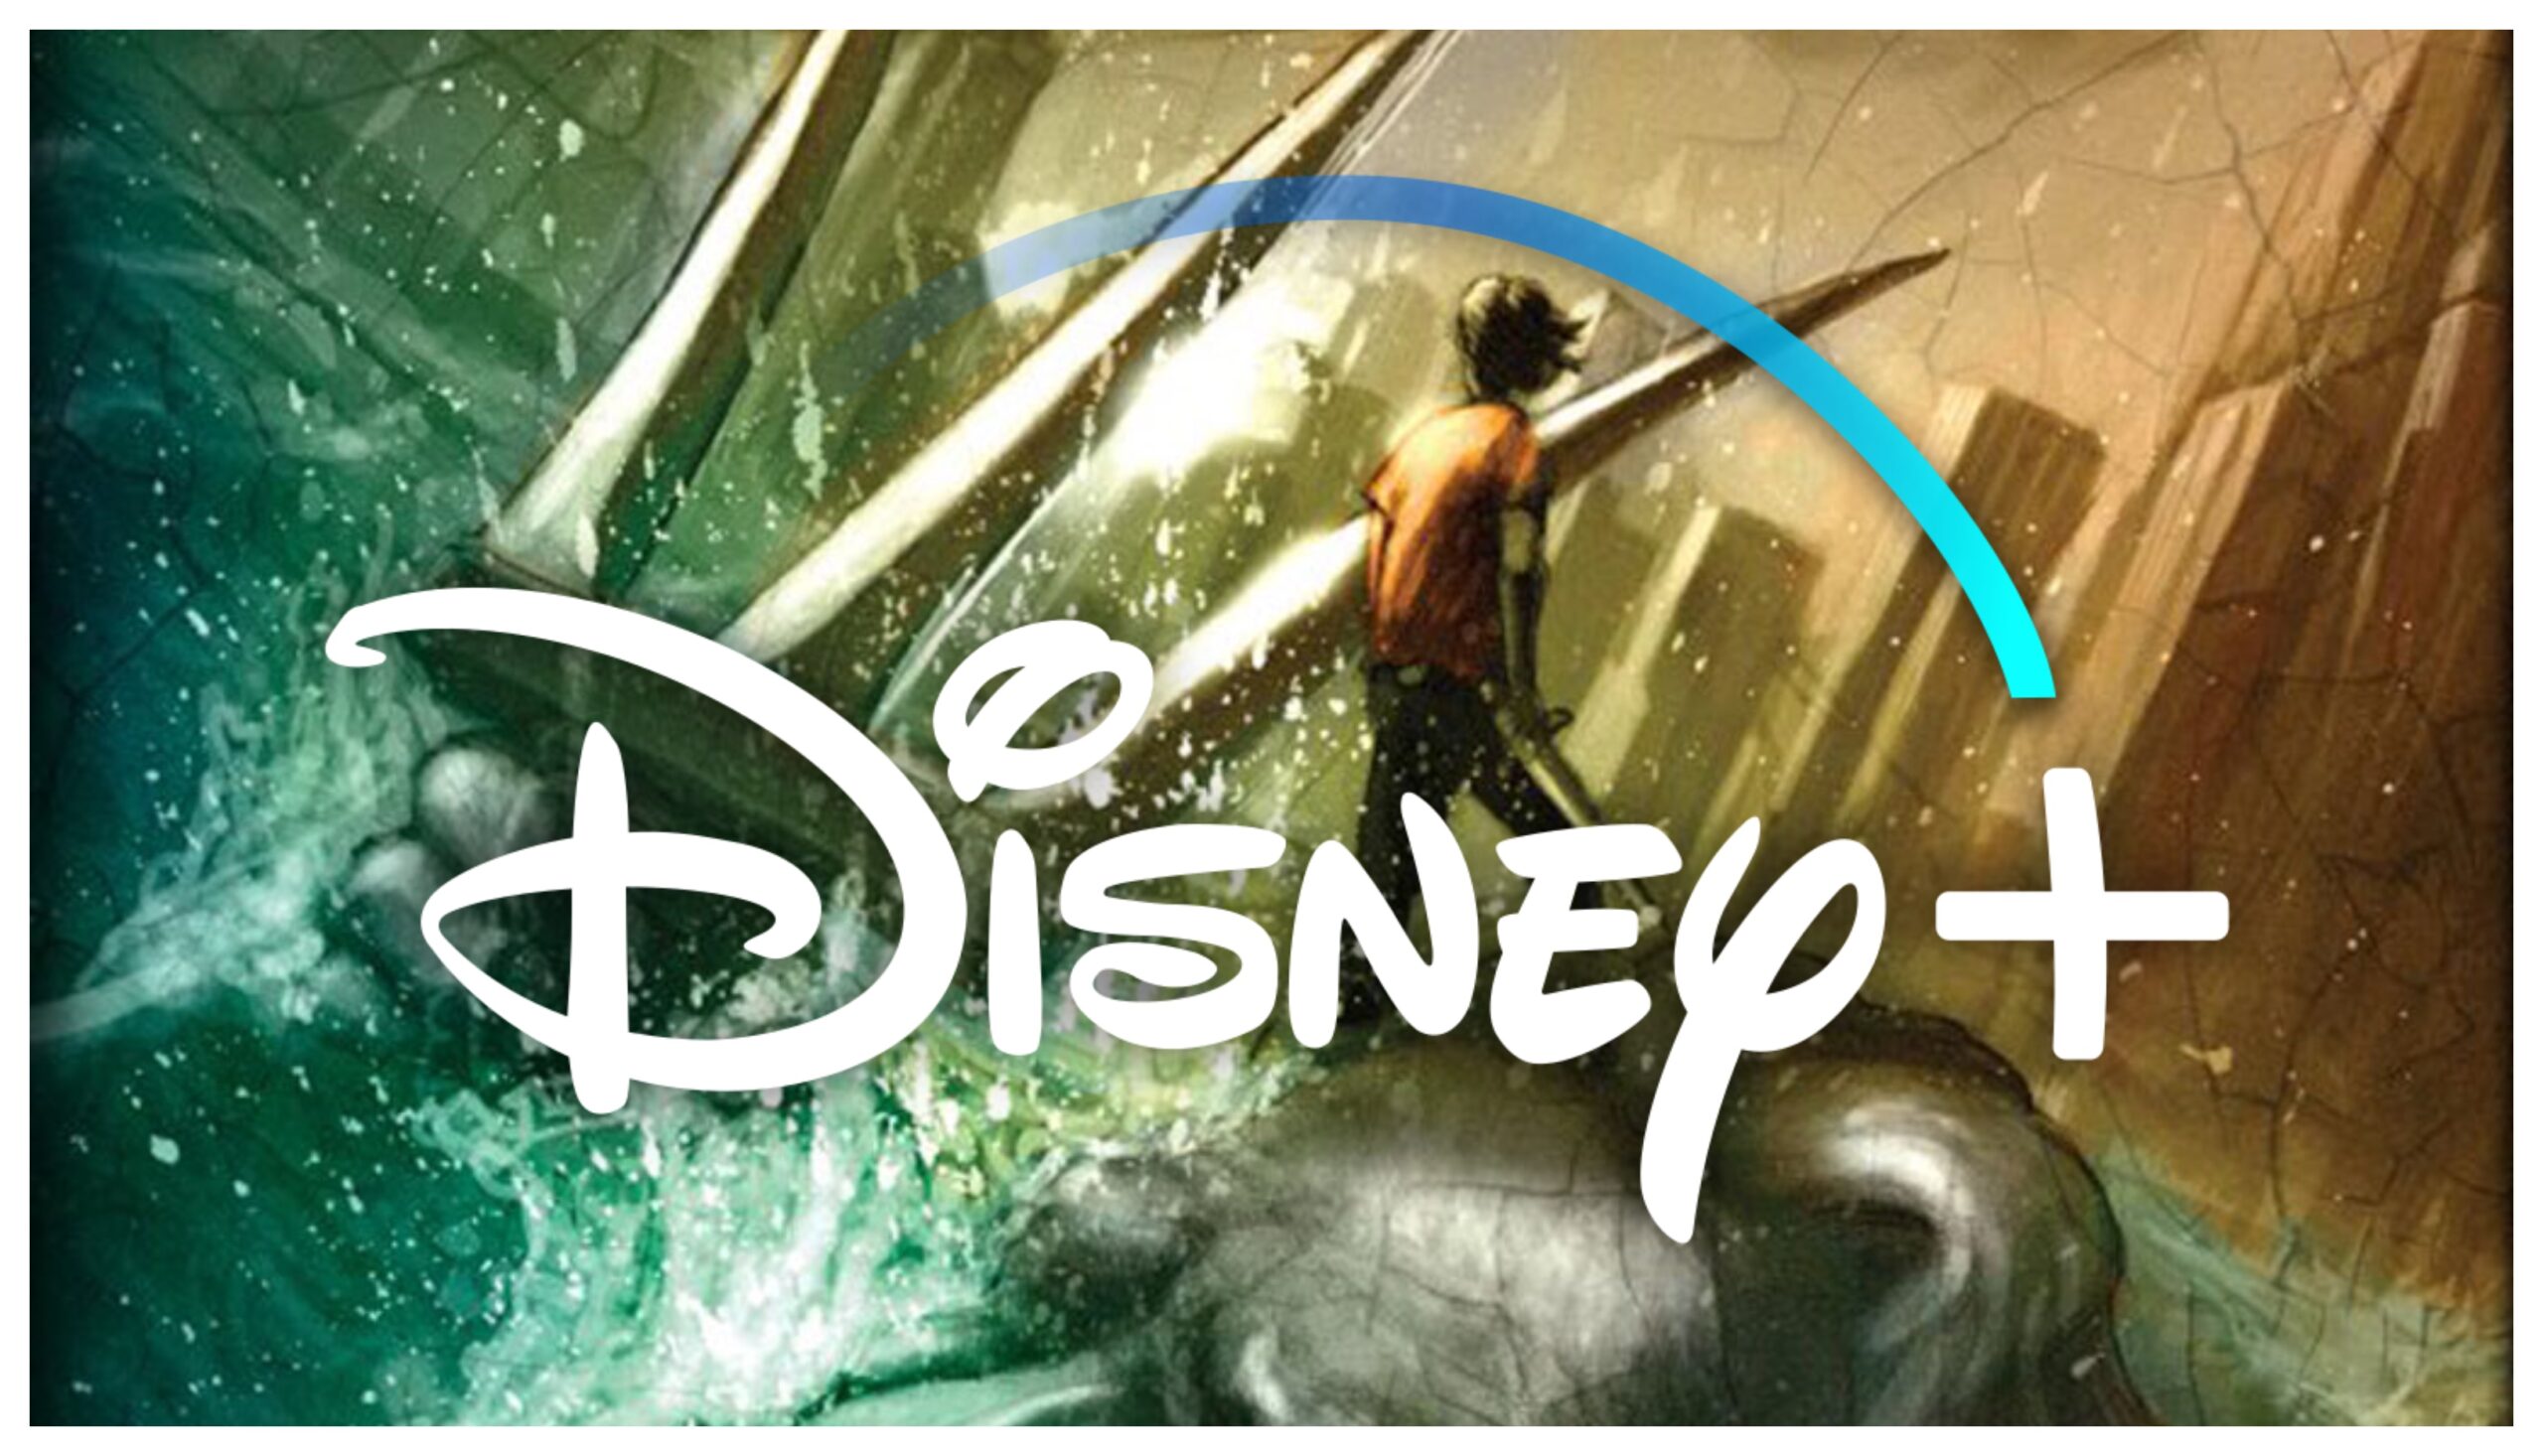 Percy Jackson cover with Disney+ logo overlay